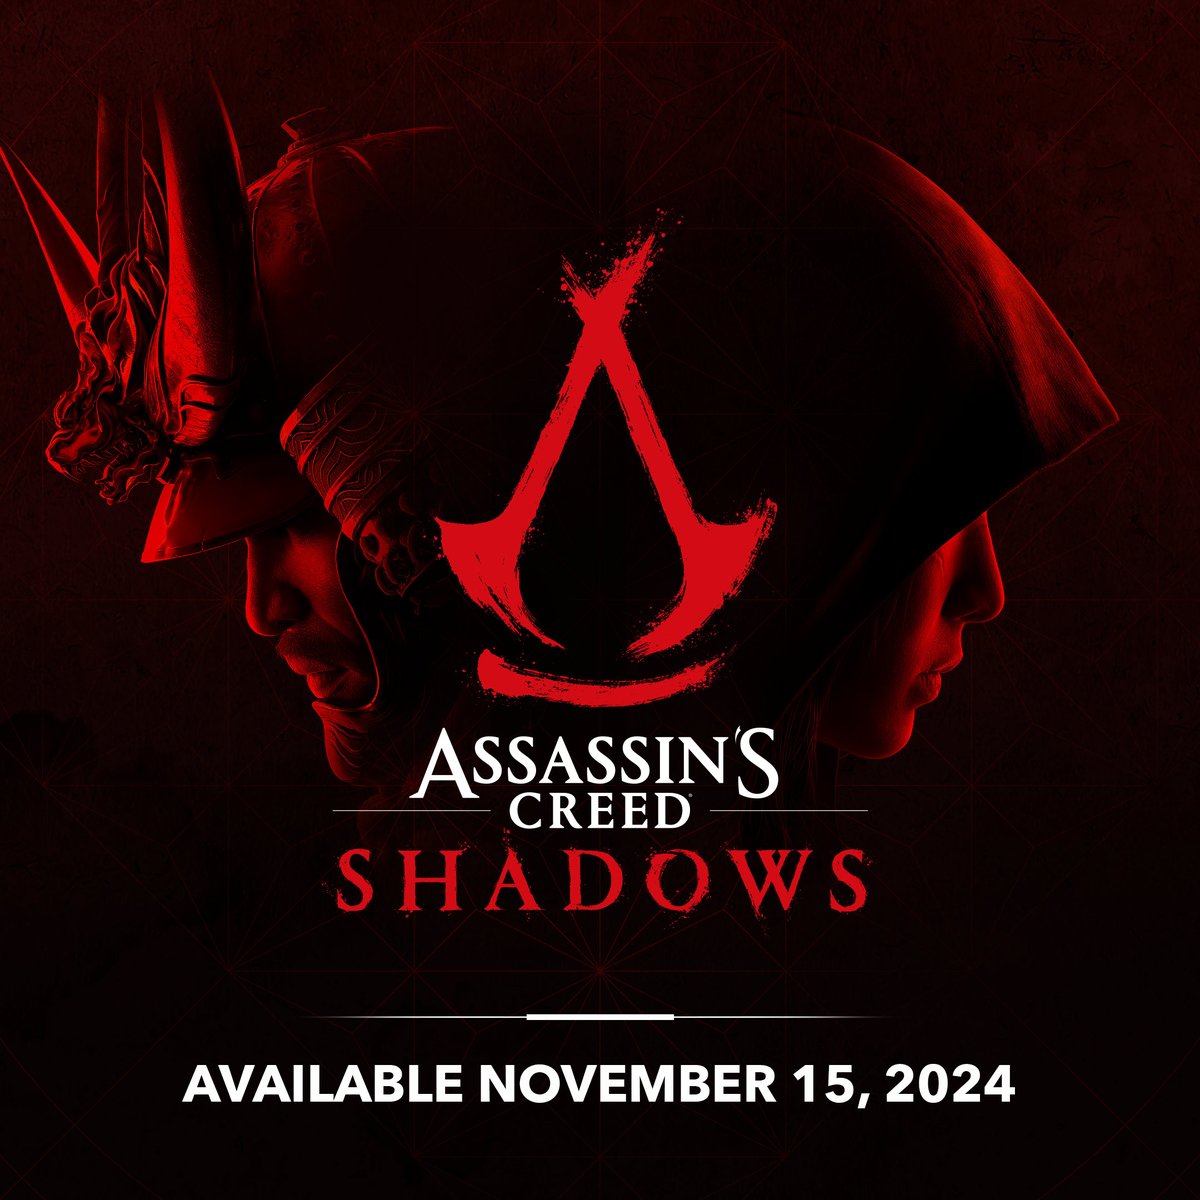 Meet the main characters of Assassin's Creed Shadows: Naoe, an adept shinobi Assassin, and Yasuke, the powerful samurai of historical legend #AssassinsCreedShadows